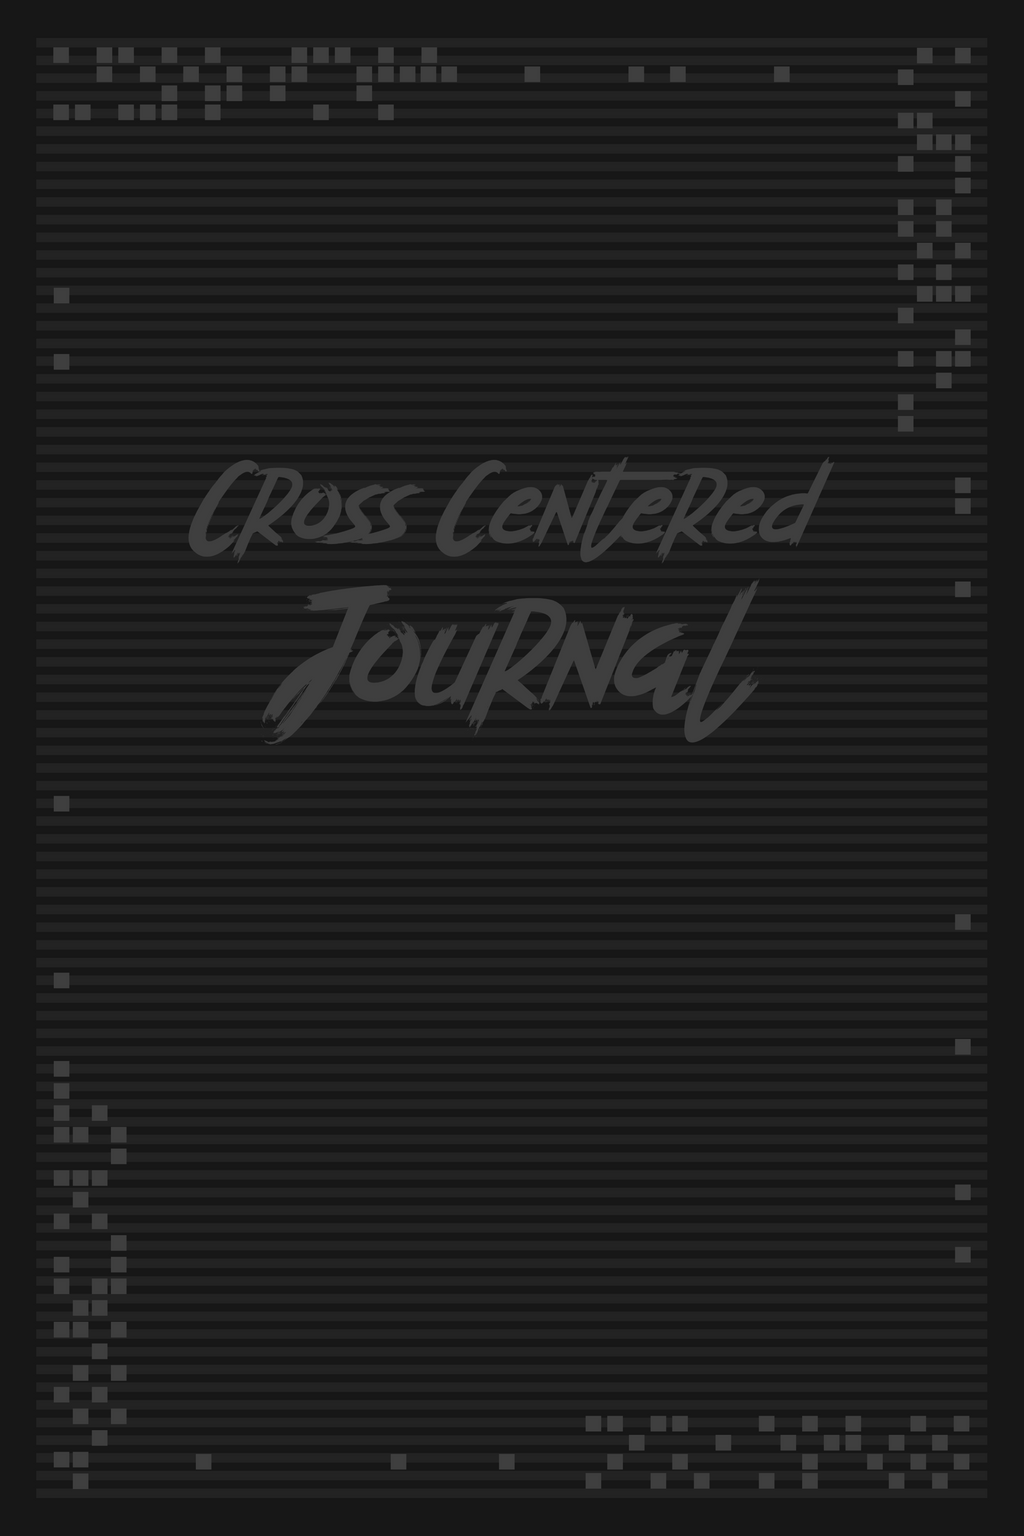 Cross Centered Journal: Inductive Bible Study Journal, Prayer and Reflective Journal